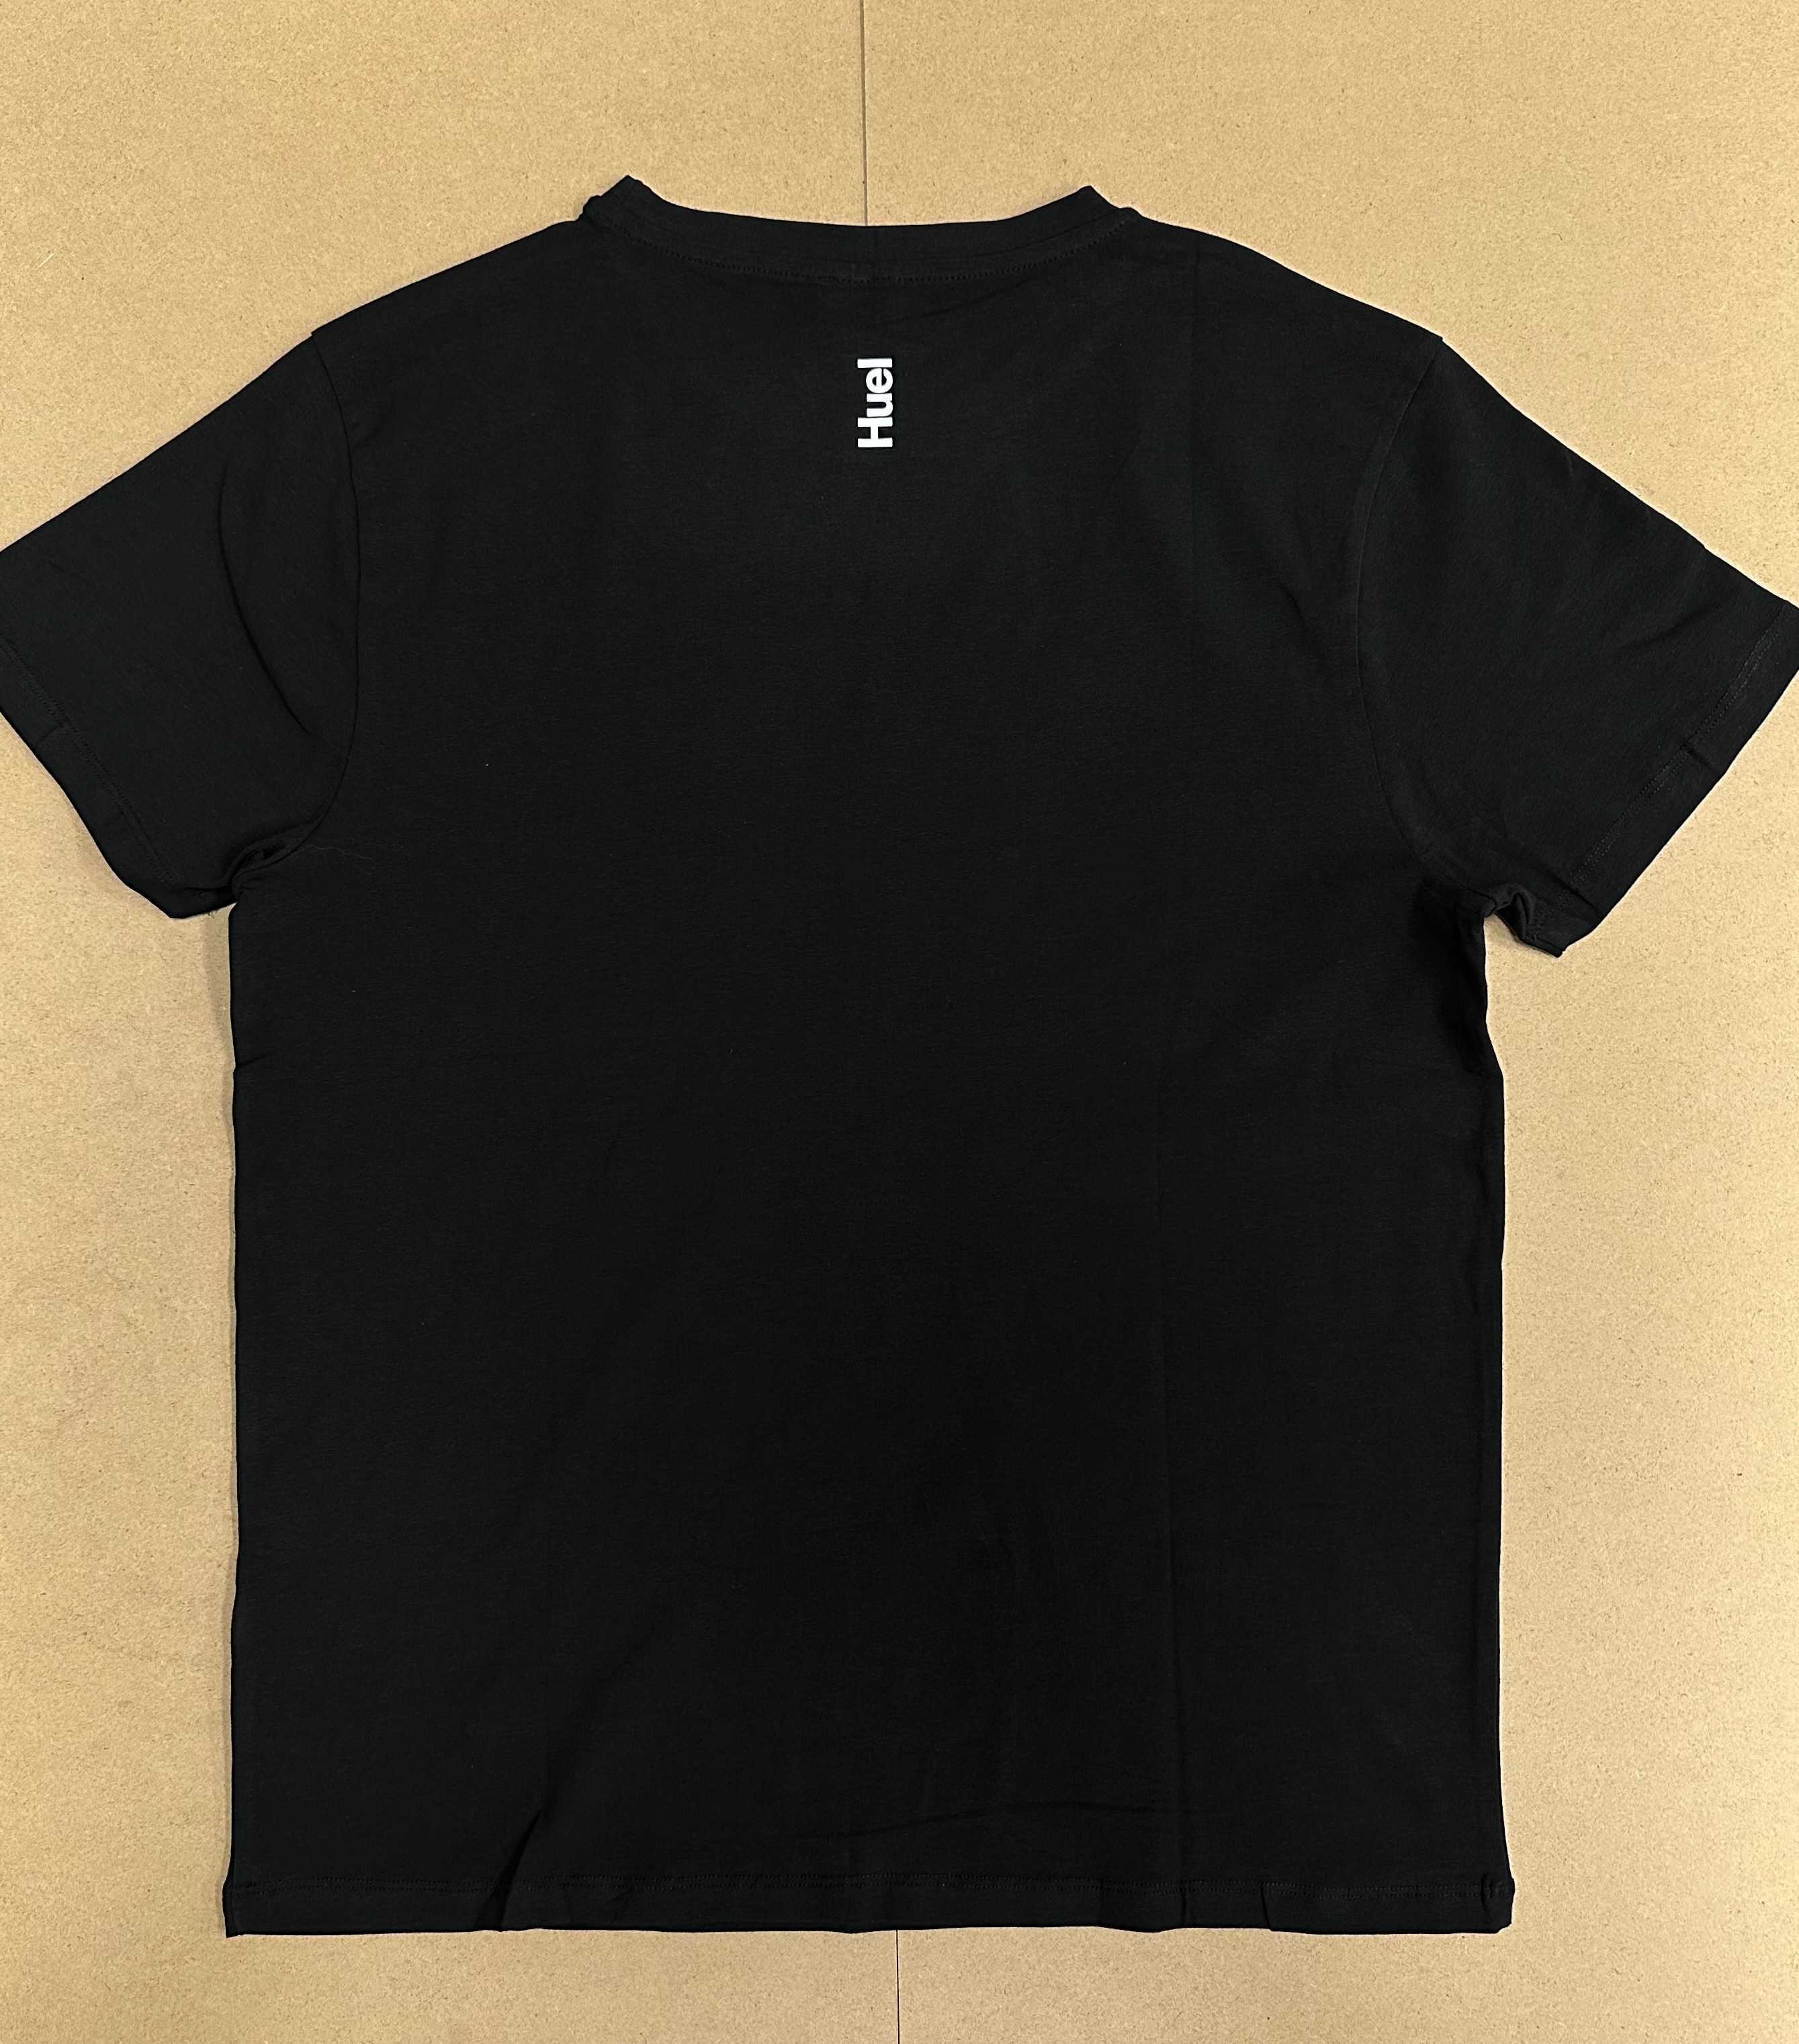 Koszulka męska T-Shirt męski Huel rozmiar S/M/L/XL/XXL czarna 5 sztuk